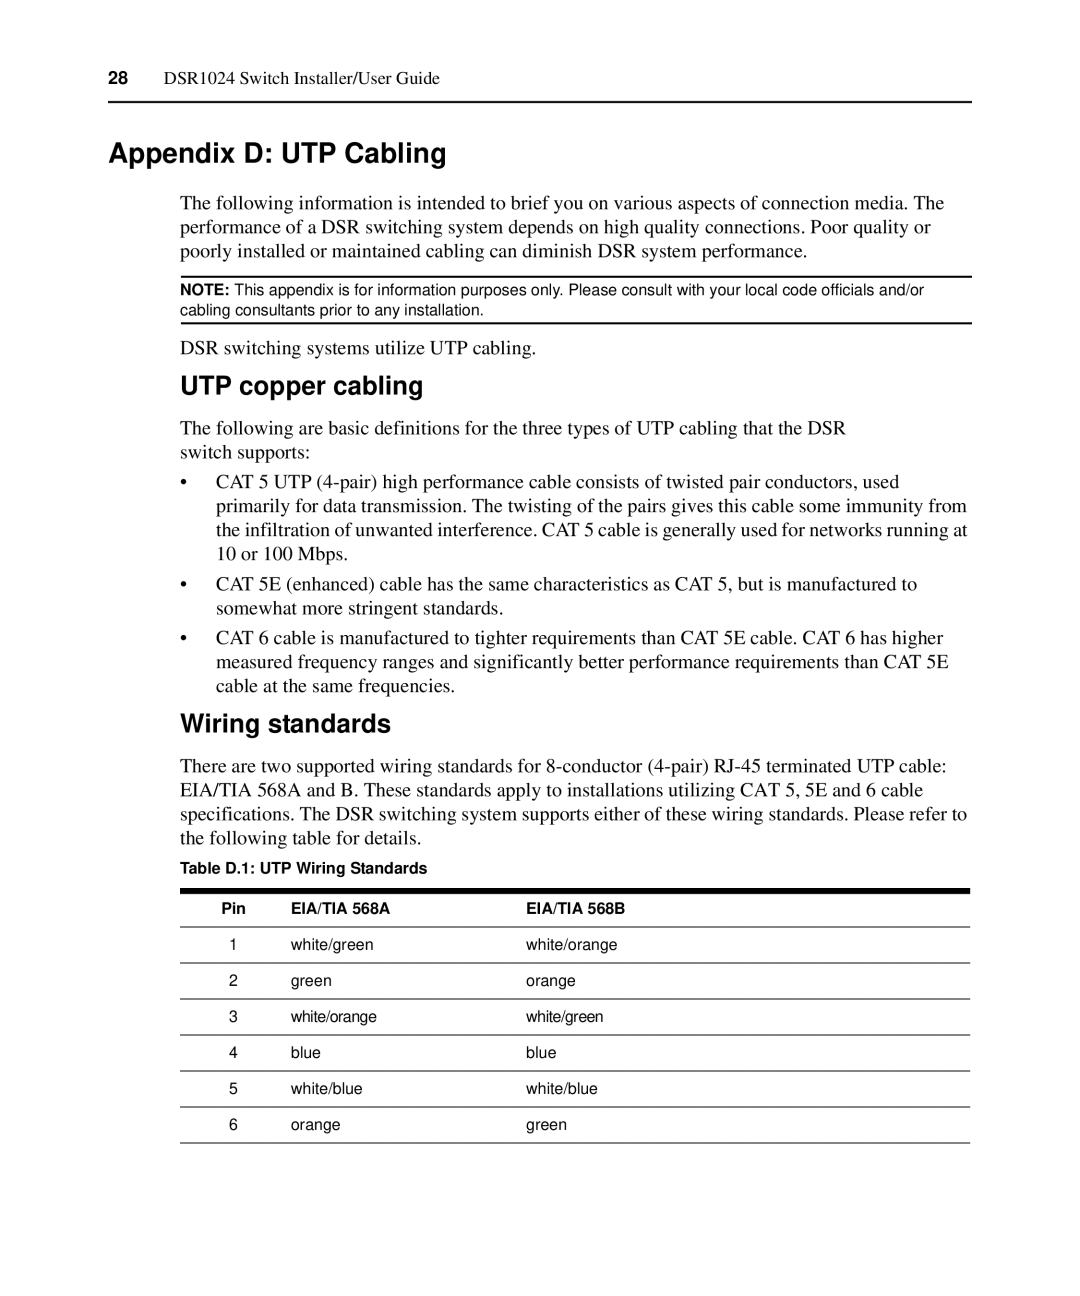 Avocent 1024 manual Appendix D UTP Cabling, UTP copper cabling, Wiring standards 